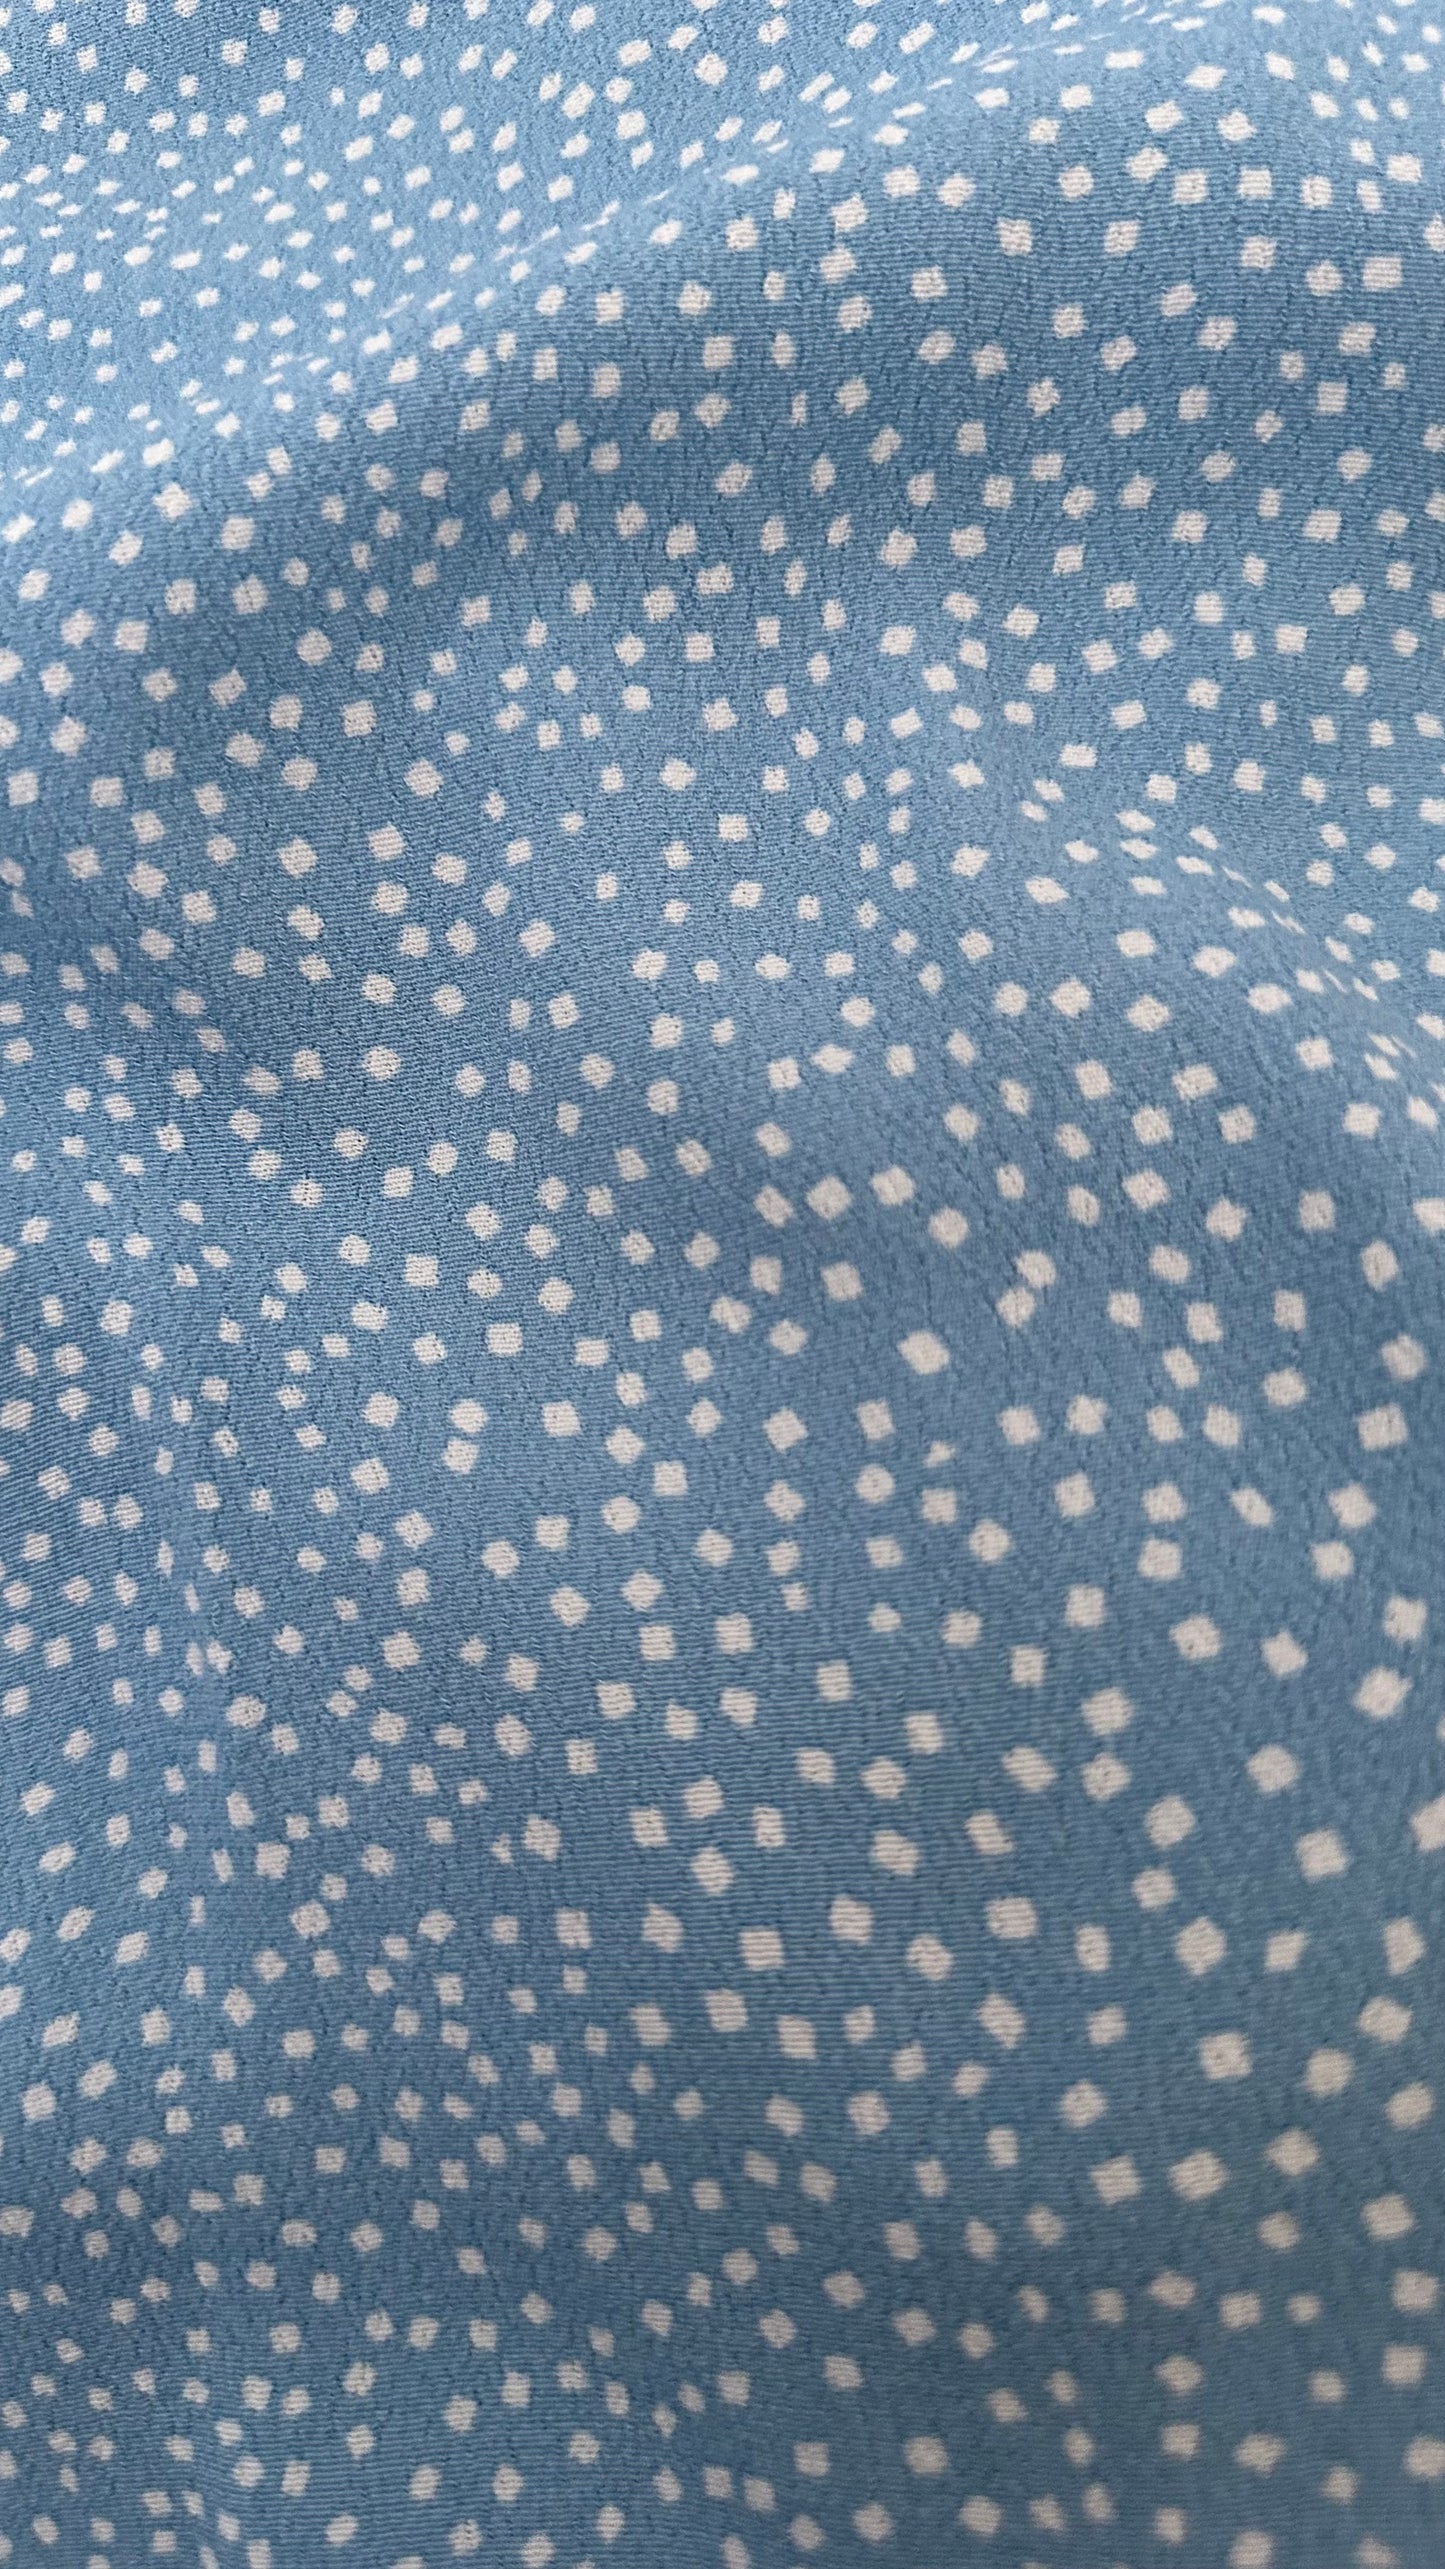 & other stories light blue white polka dot tie front side split midi dress small medium large UK 8-10 10-12